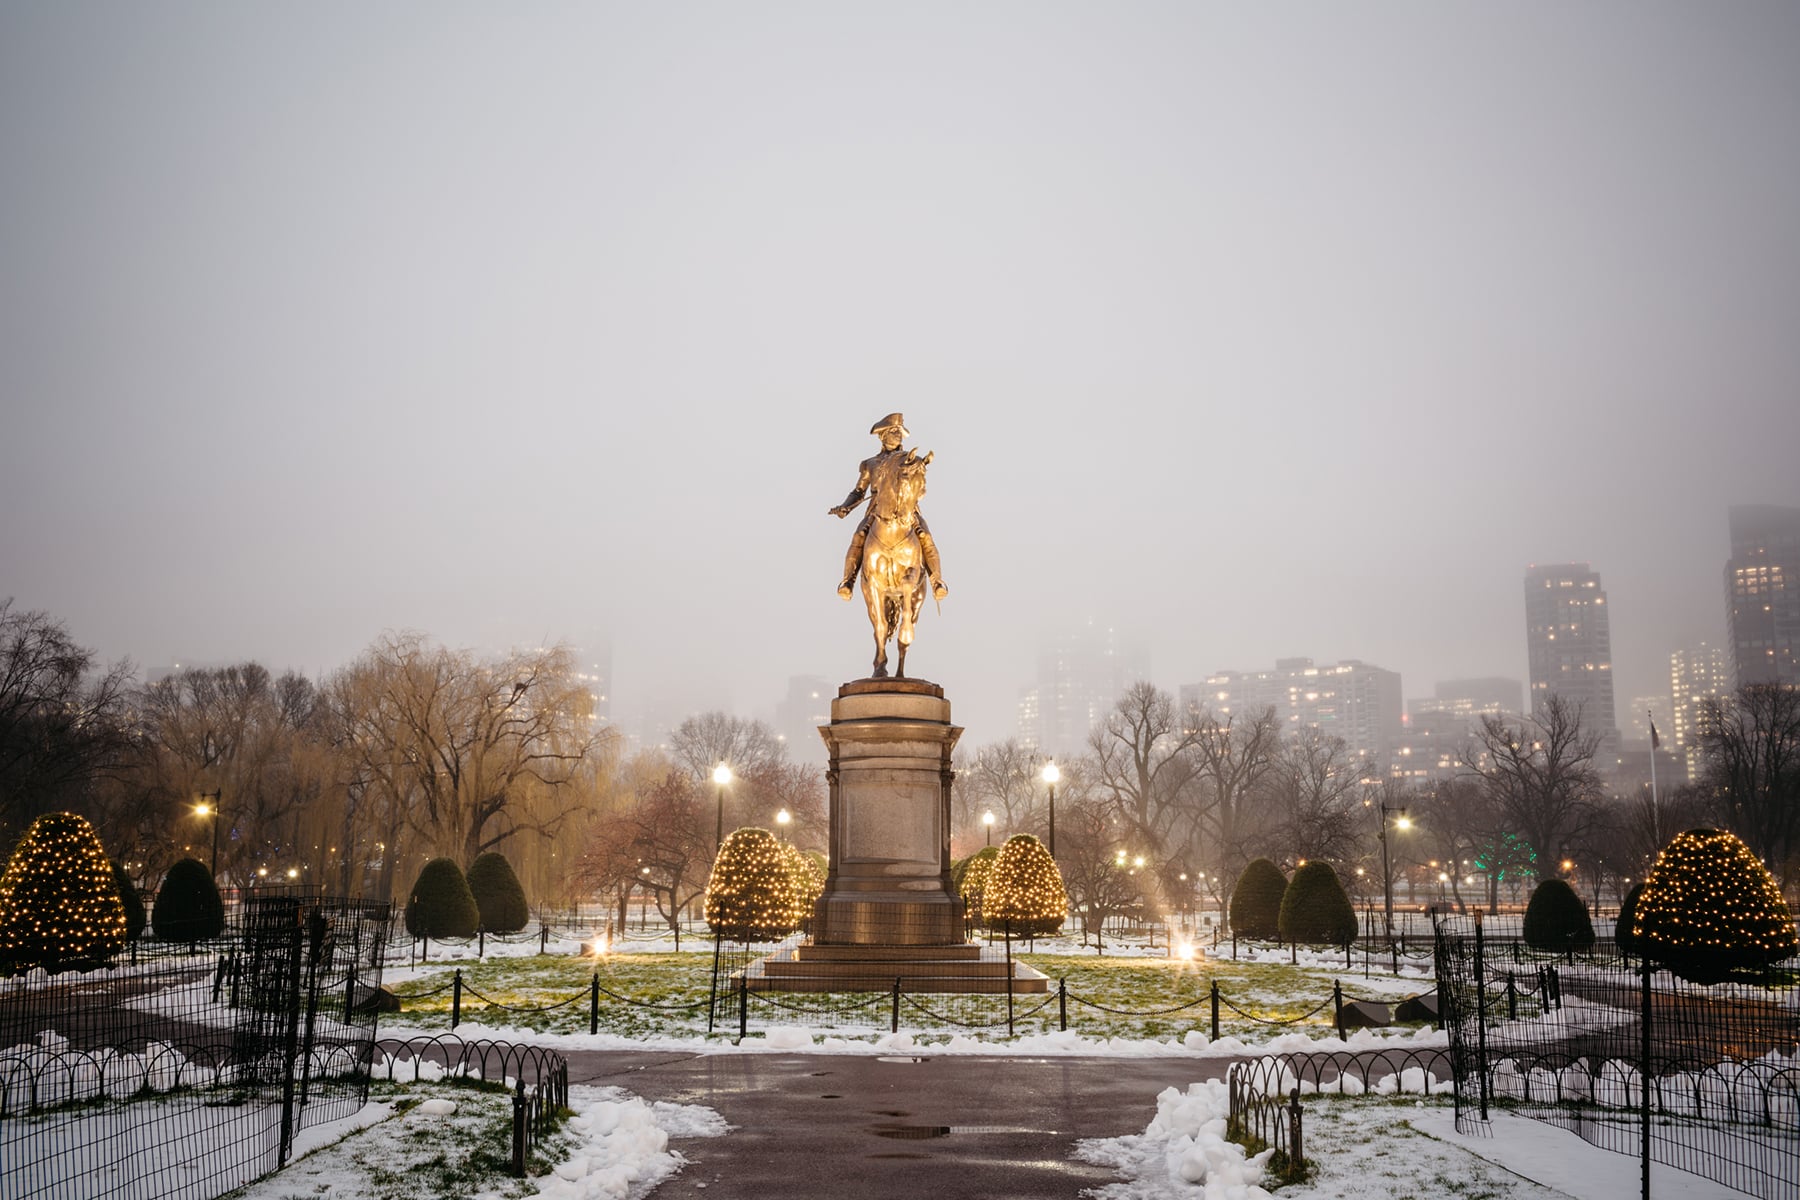 The George Washington Statue by Thomas Ball has graced the Boston Public Garden since 1869.